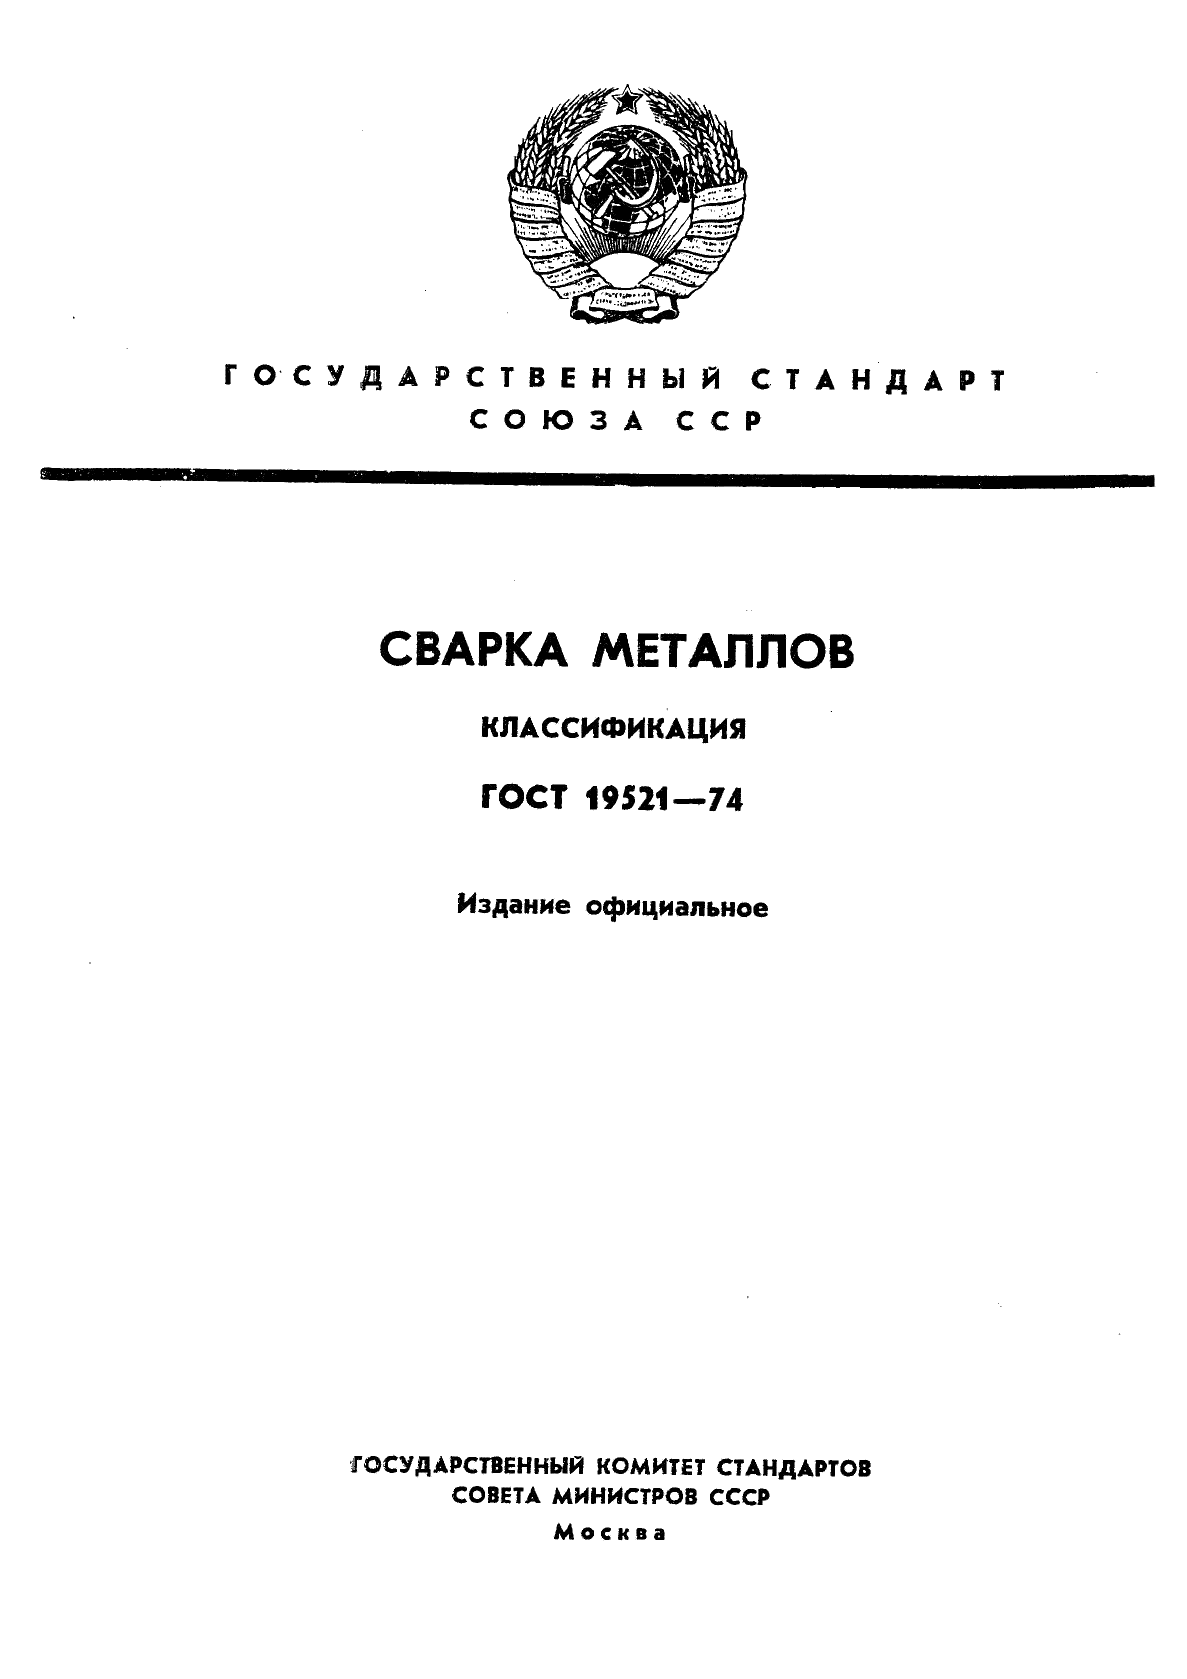 ГОСТ 19521-74 Сварка металлов. Классификация (фото 1 из 14)